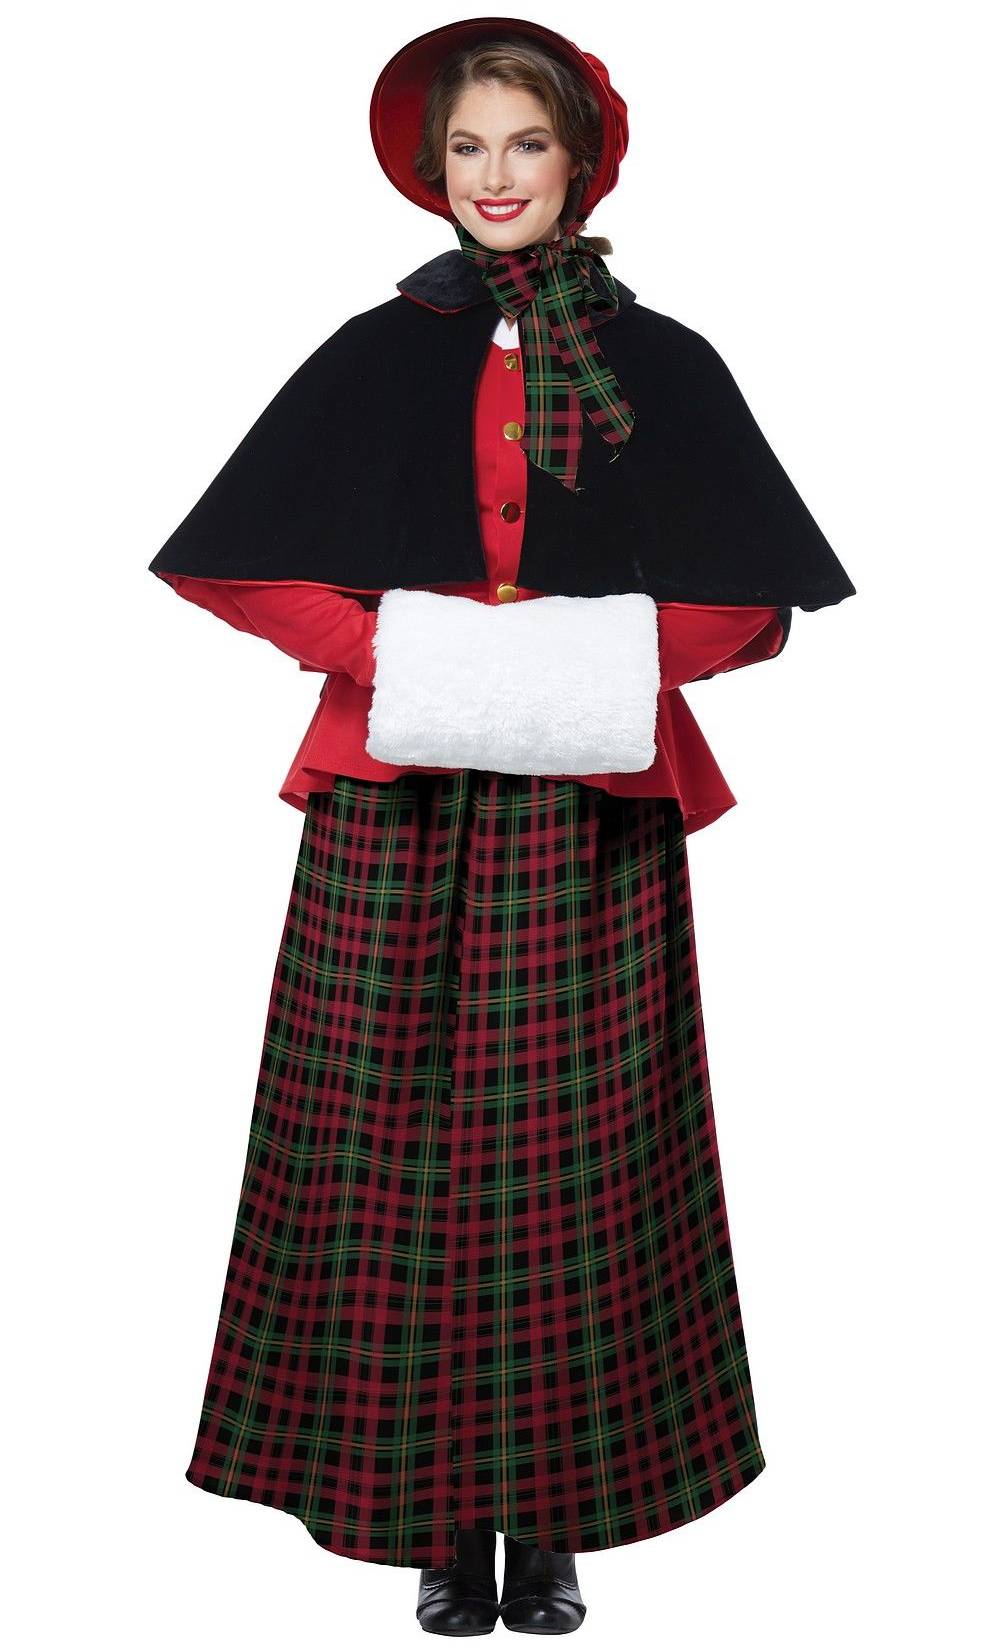 Costume-Mère-Noël-tradition